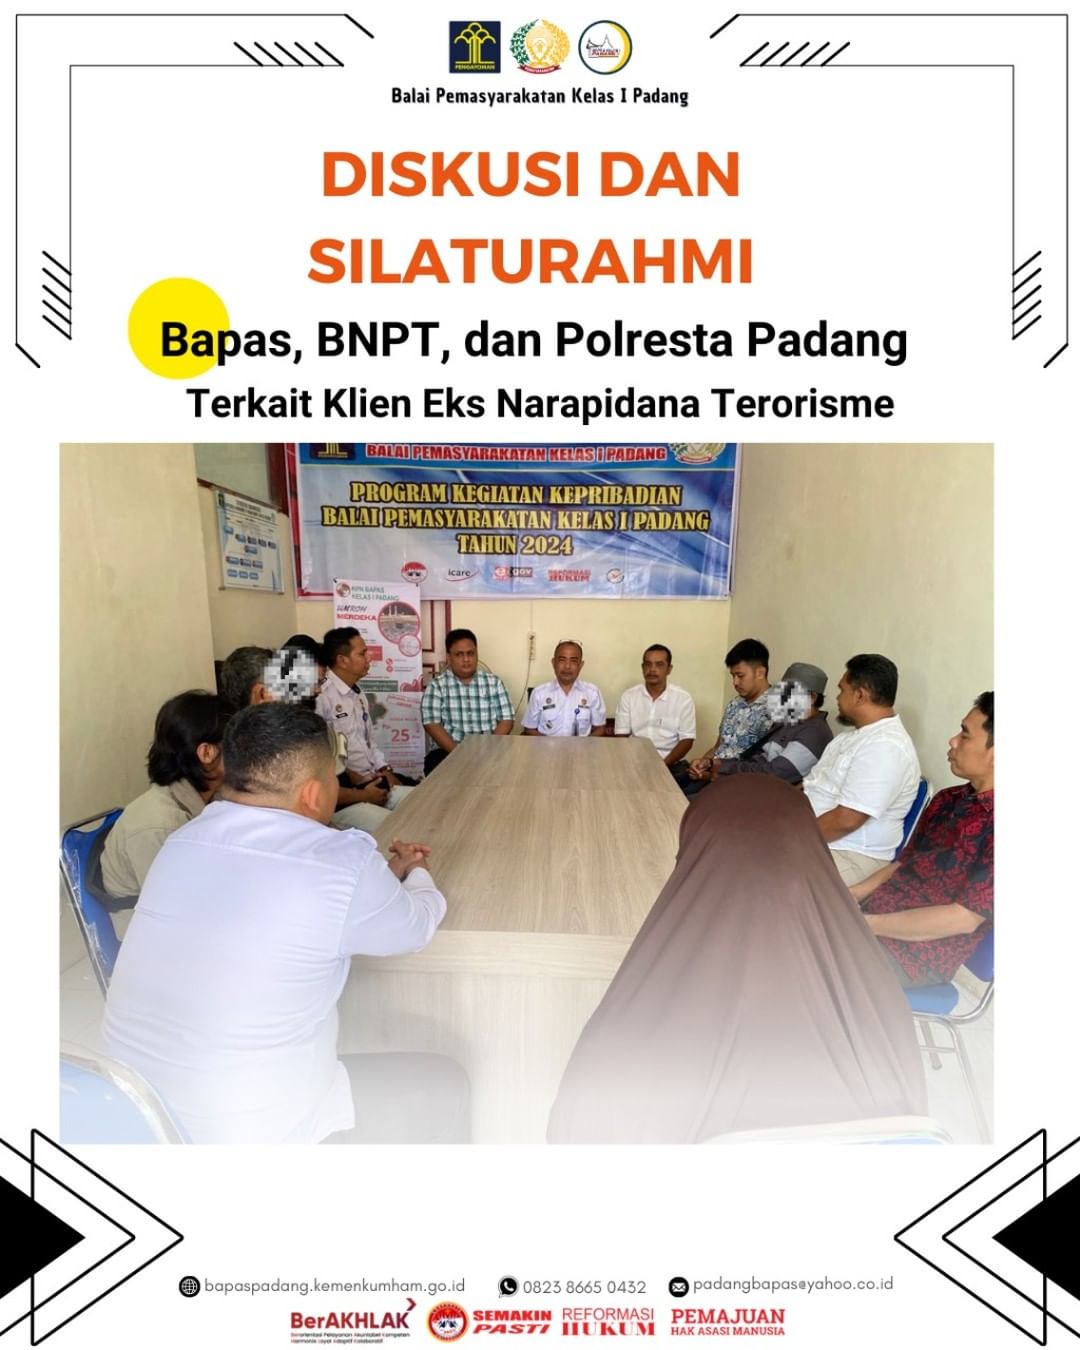 Bapas Padang, BNPT, dan Polresta Padang lakukan Diskusi dan Silaturrahmi terkait Klien Eks Narapidana Terorisme